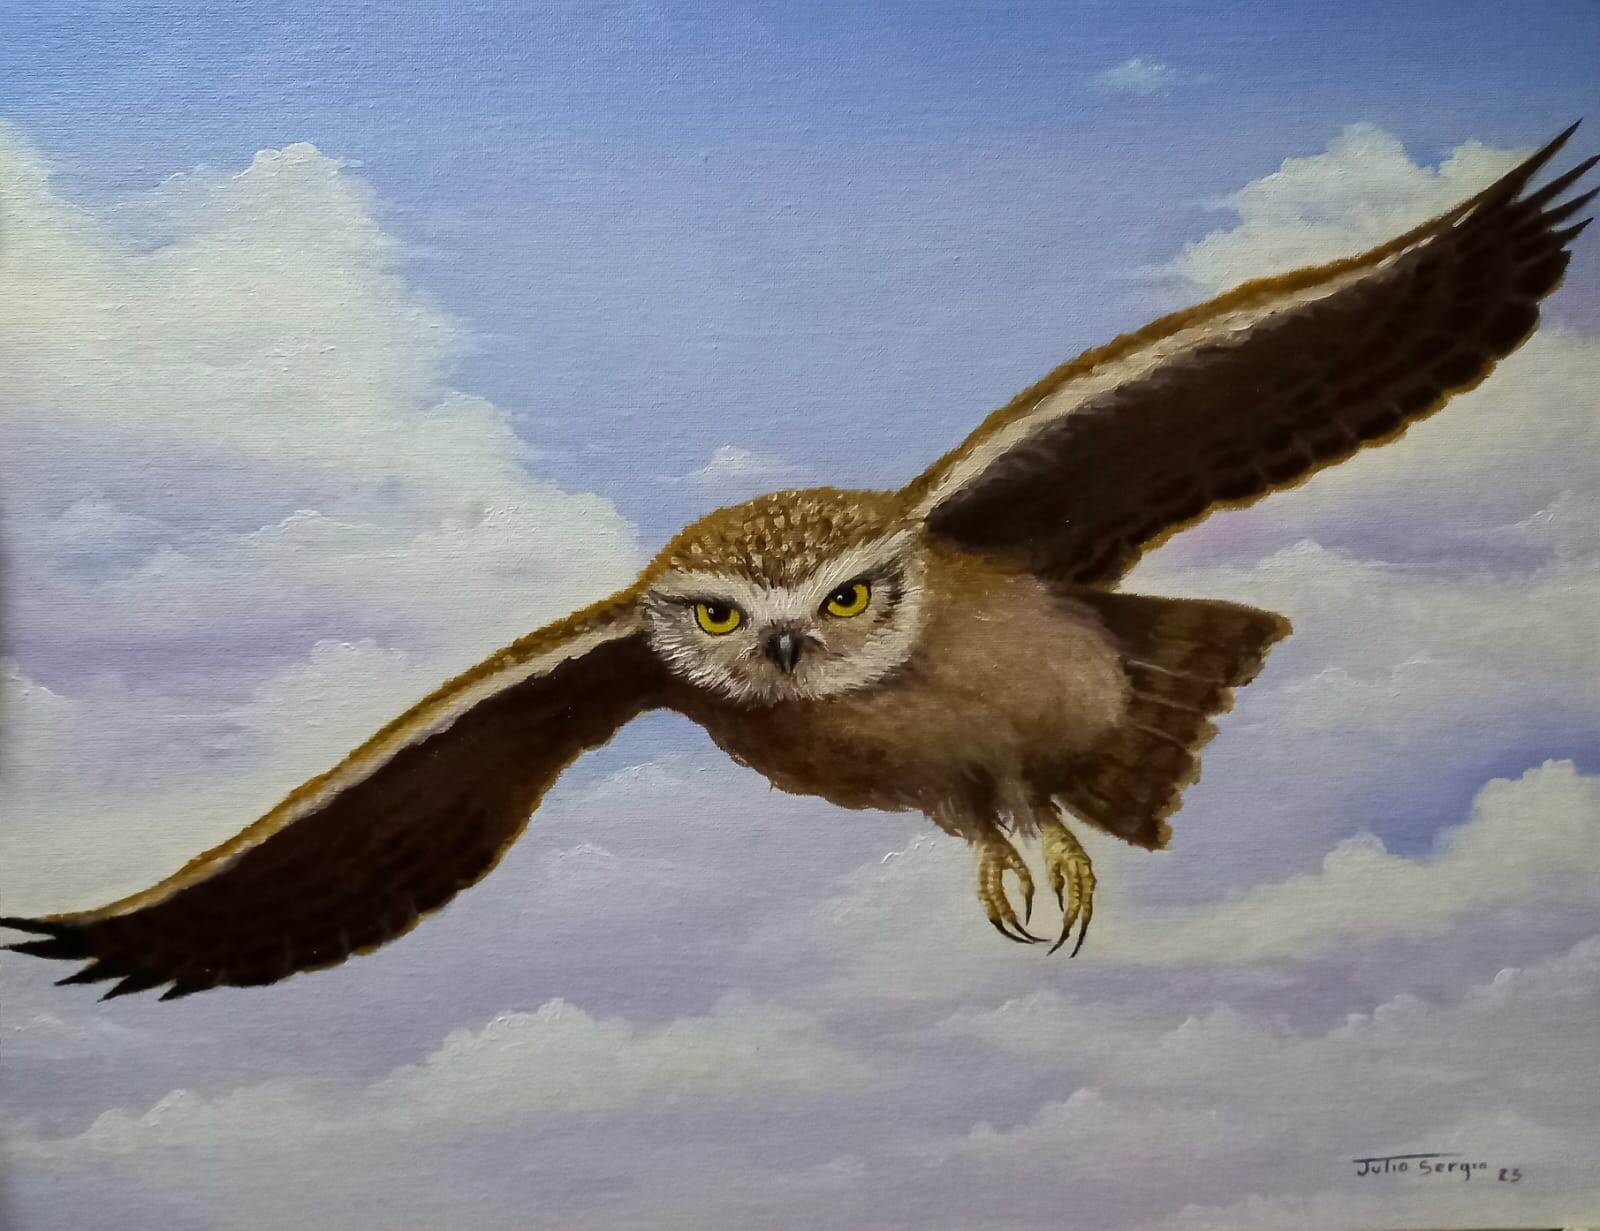 Owl flying
Oil canvas
50 x 40 cm